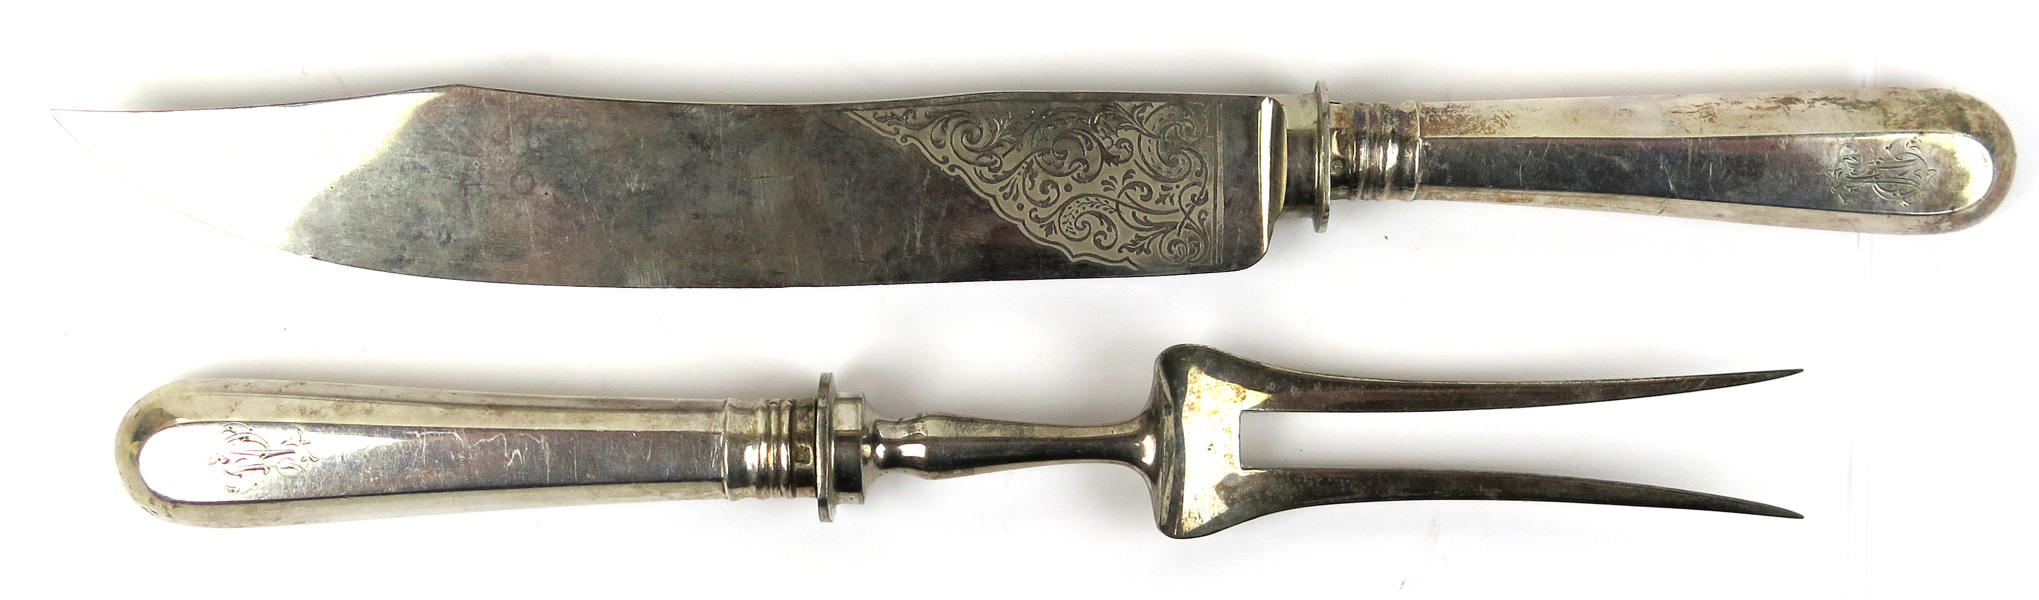 Trancherbestick, 1 par, silver med stålblad, Ryssland, 1800-tal, _3229a_8d86928e7d1248d_lg.jpeg